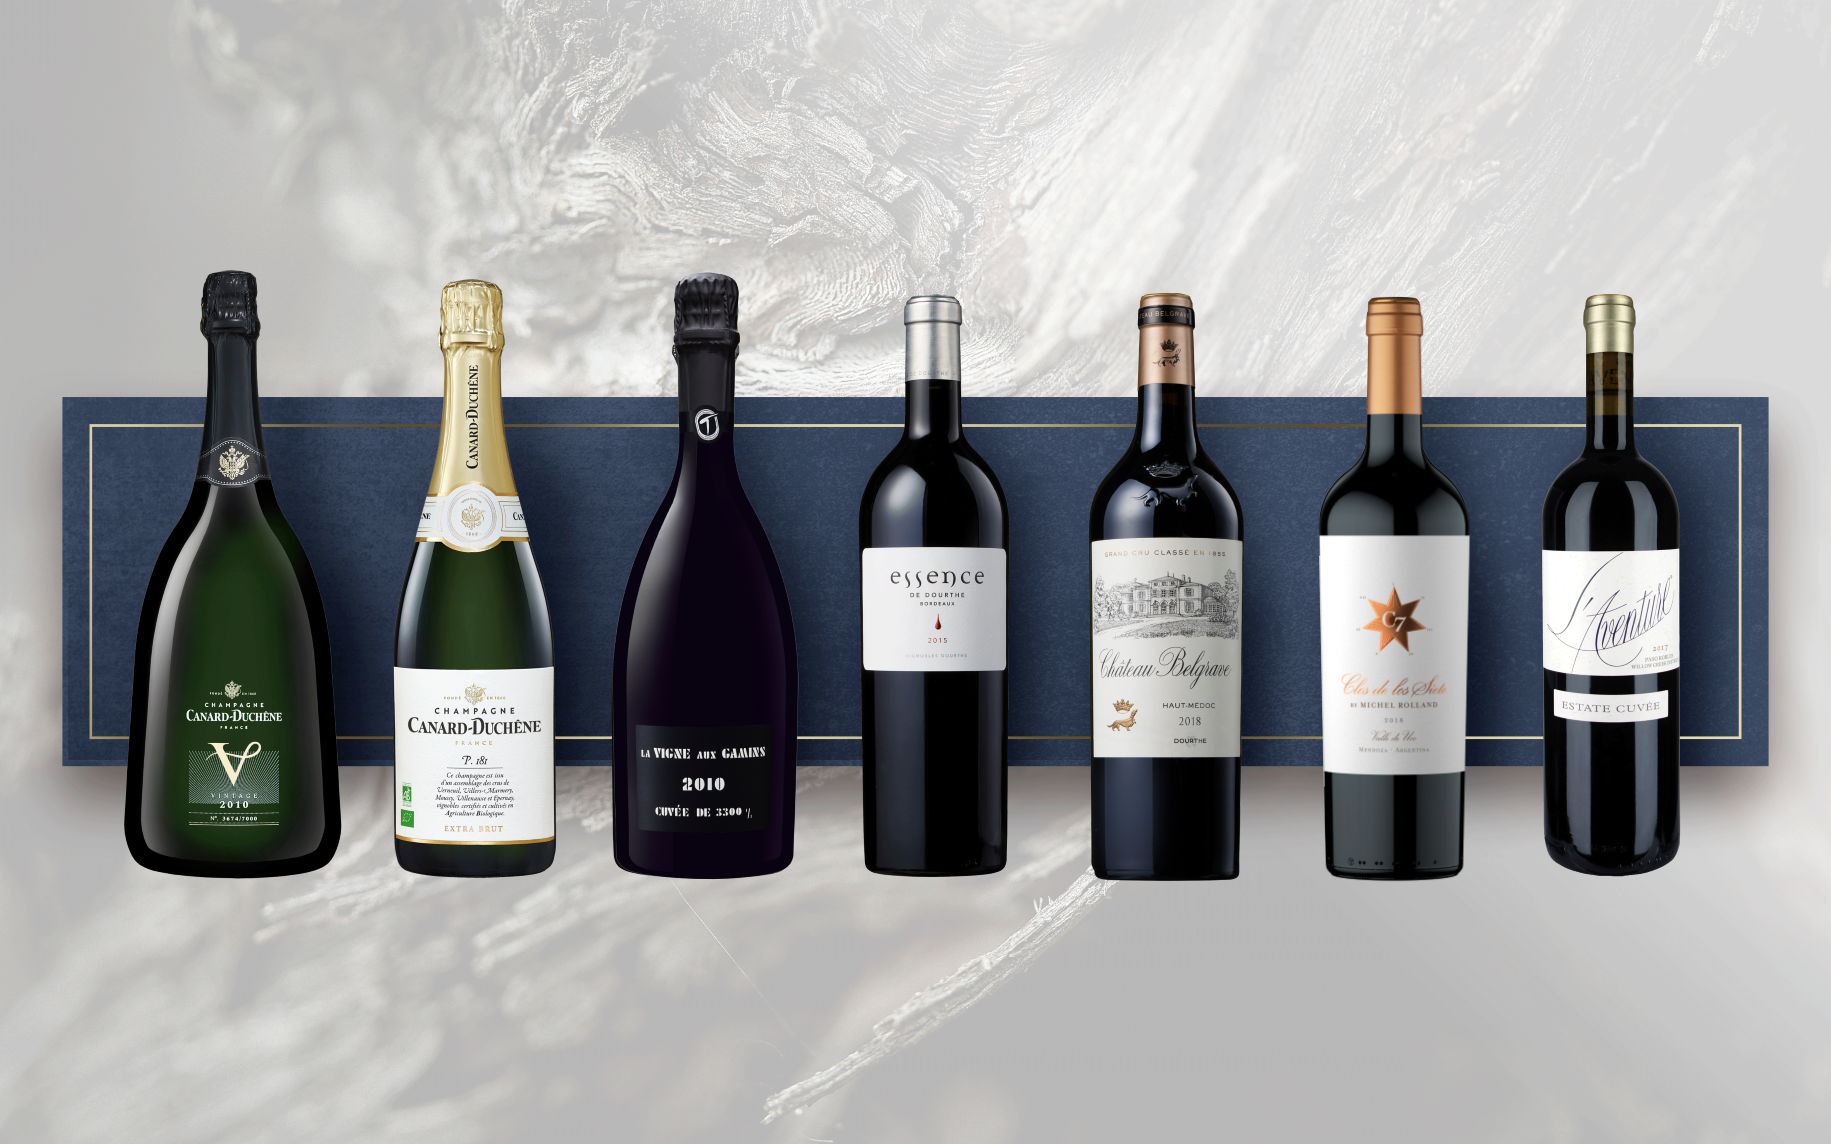 Champagnes & Chateaux wines portfolio